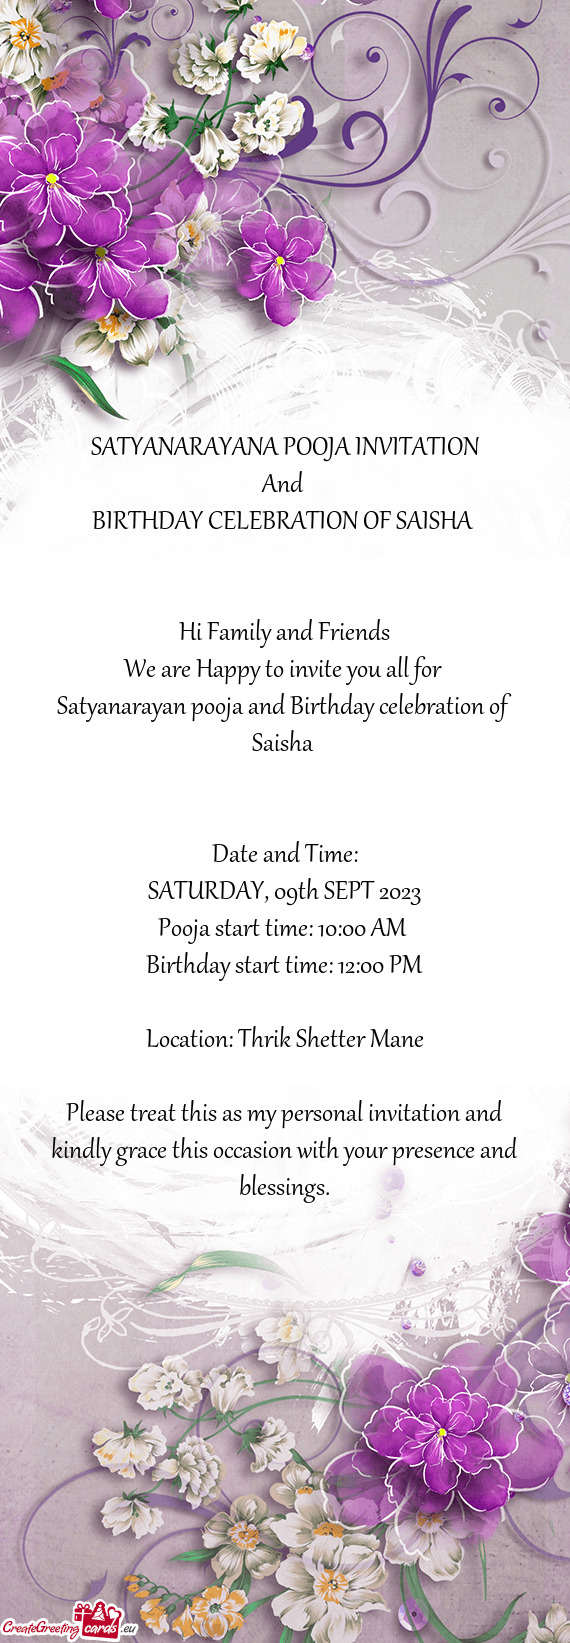 Satyanarayan pooja and Birthday celebration of Saisha